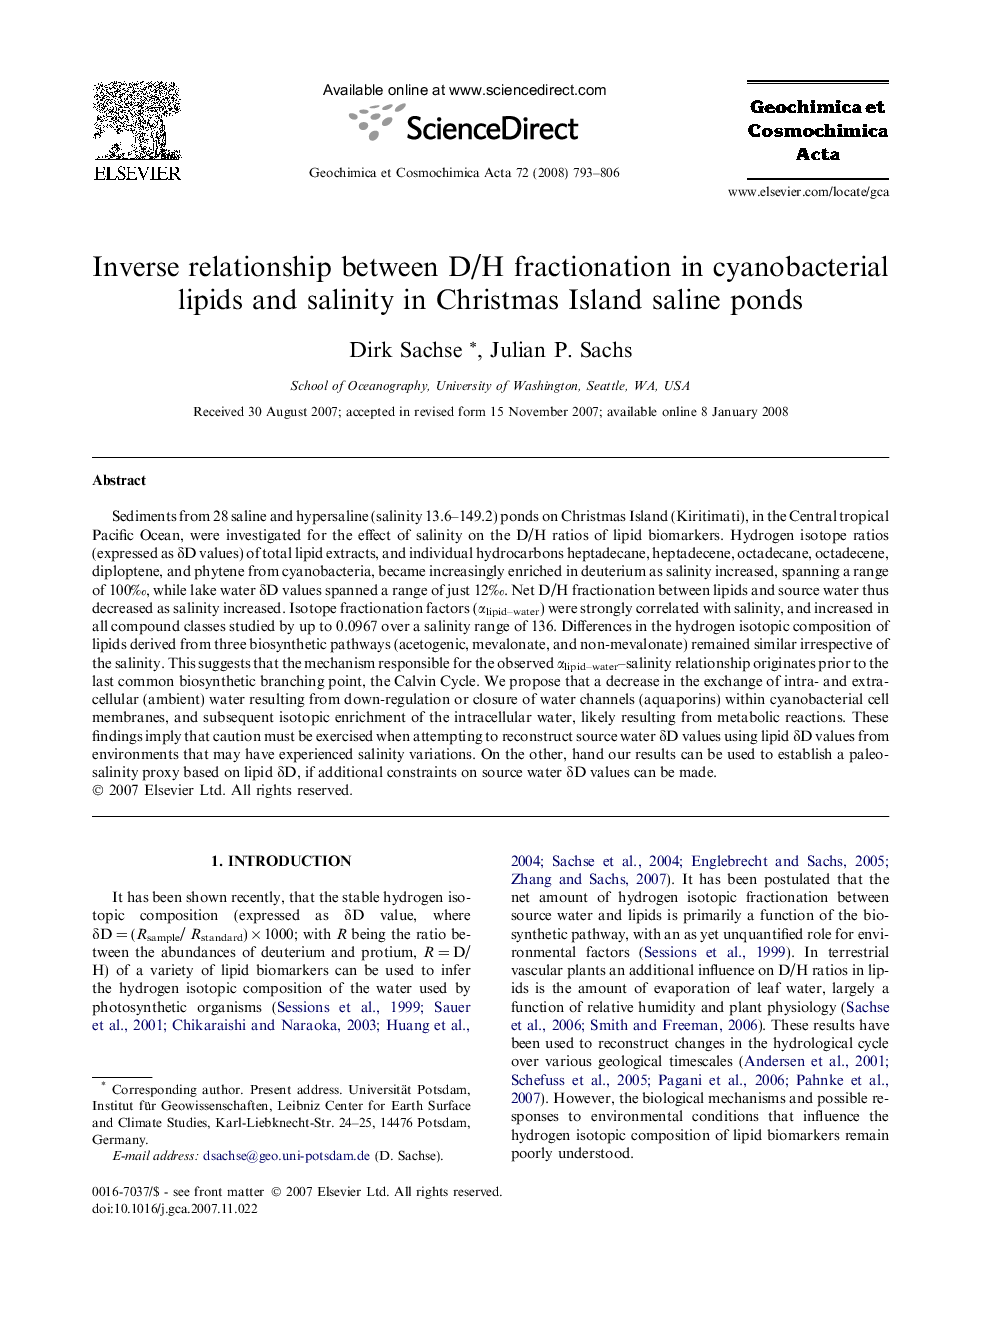 Inverse relationship between D/H fractionation in cyanobacterial lipids and salinity in Christmas Island saline ponds